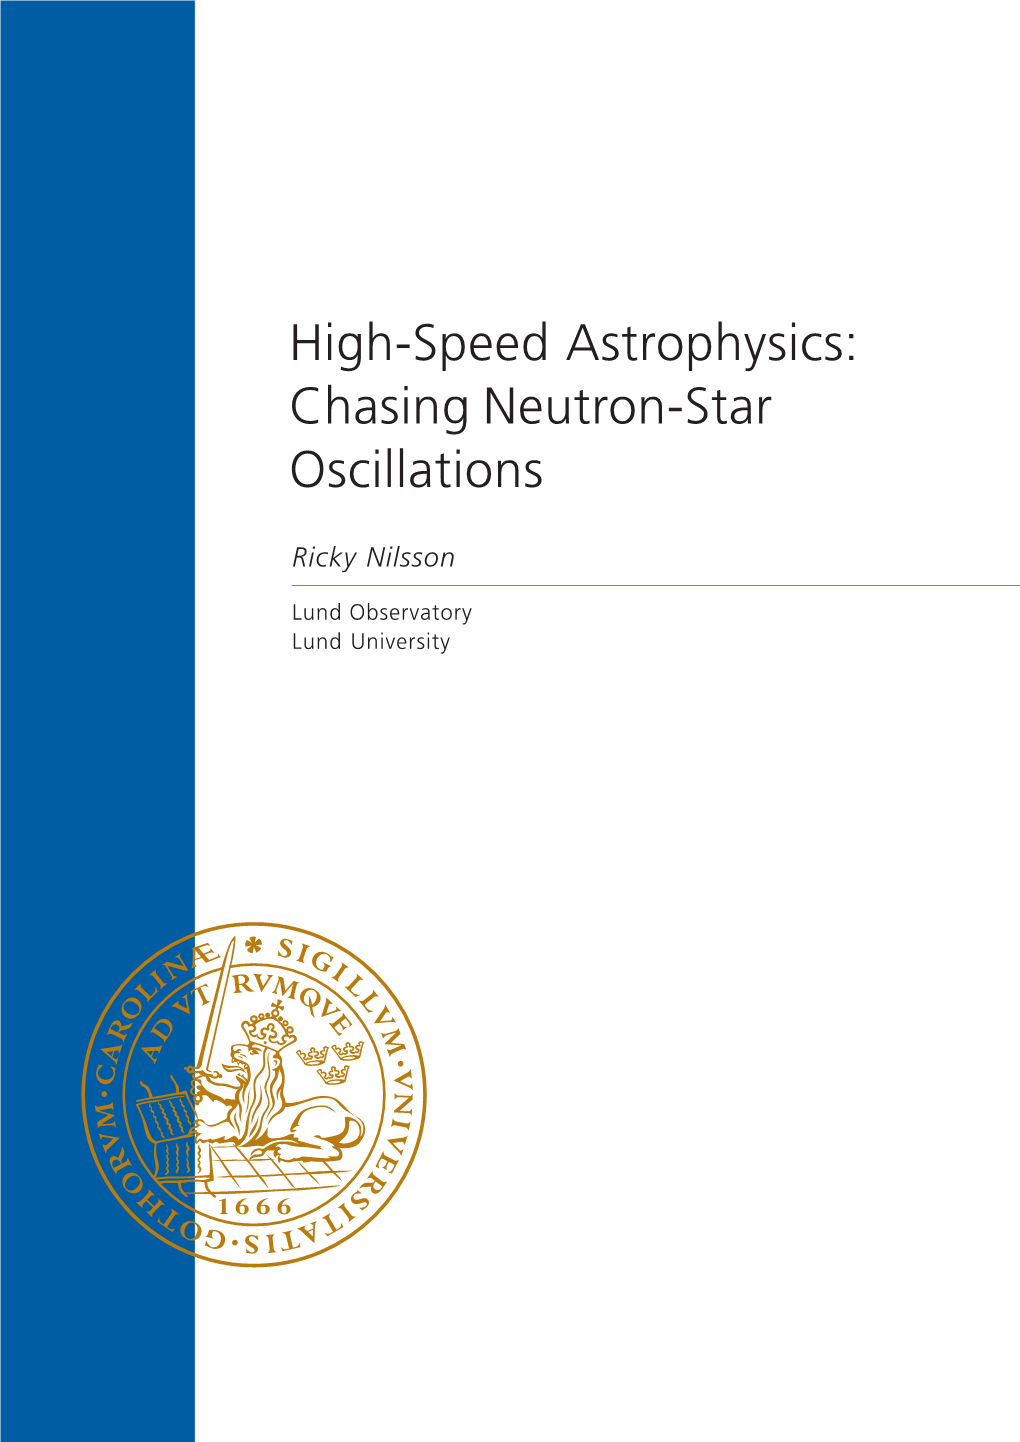 High-Speed Astrophysics: Chasing Neutron-Star Oscillations